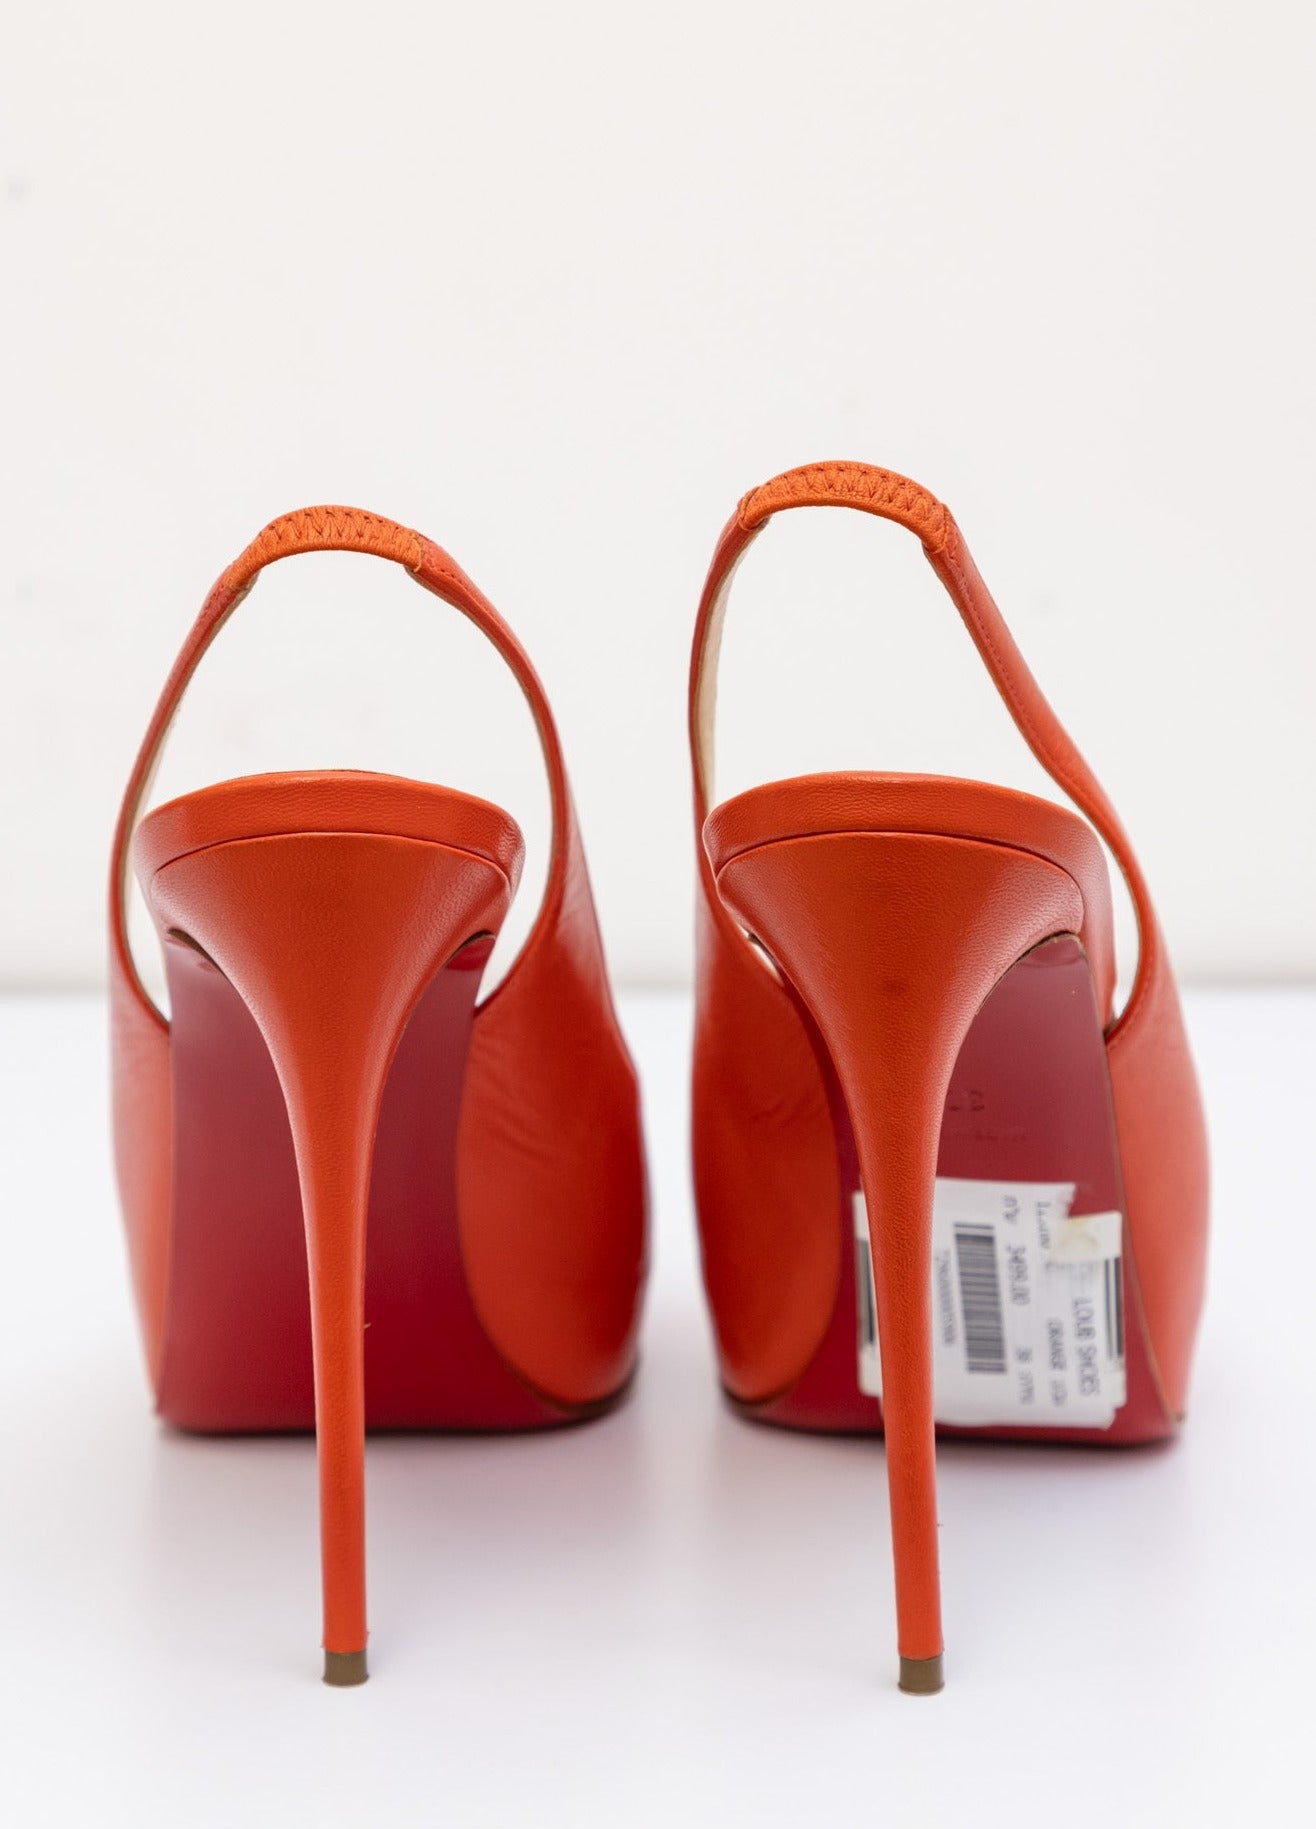 CHRISTIAN LOUBOUTIN Orange Leather Sling-back Pumps Heels Shoes